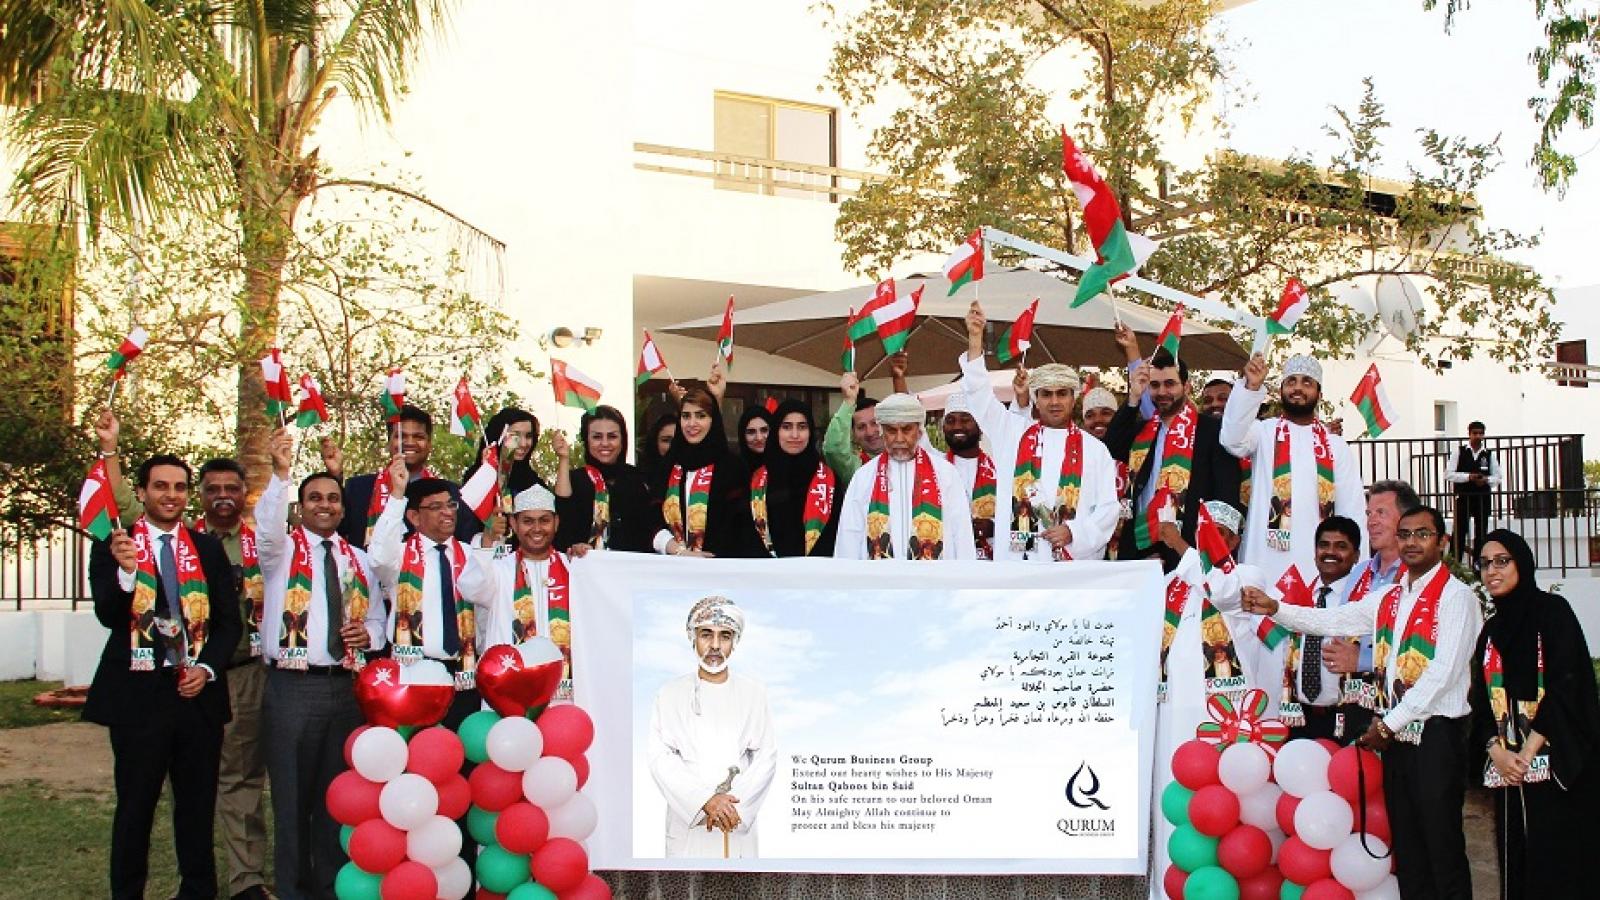 QBG Employees Mark Safe Return of His Majesty Sultan Qaboos